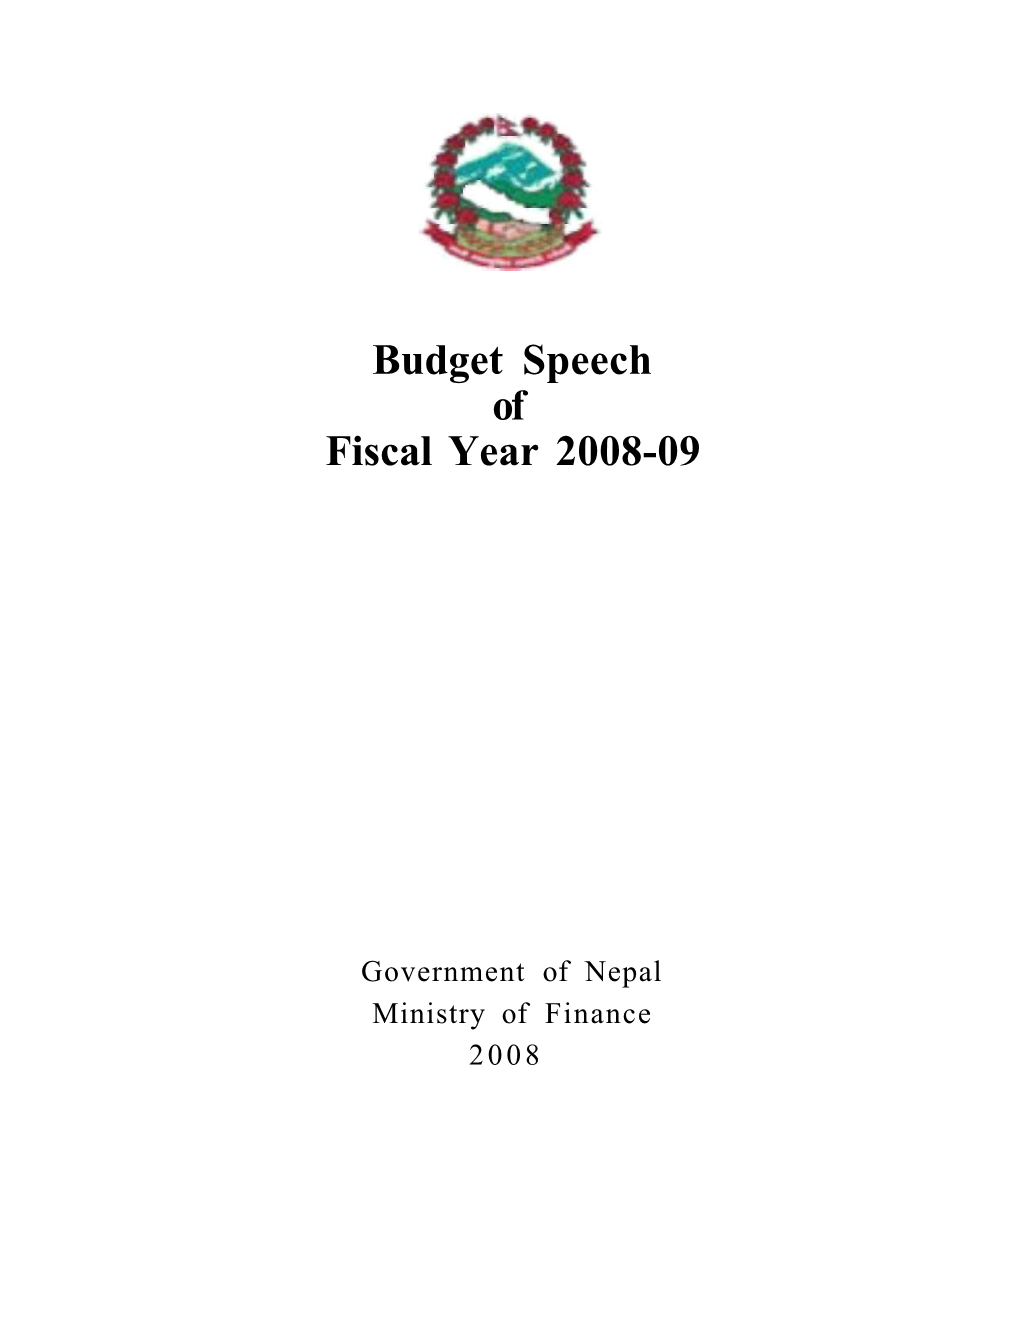 Budget Speech of Fiscal Year 2008-09